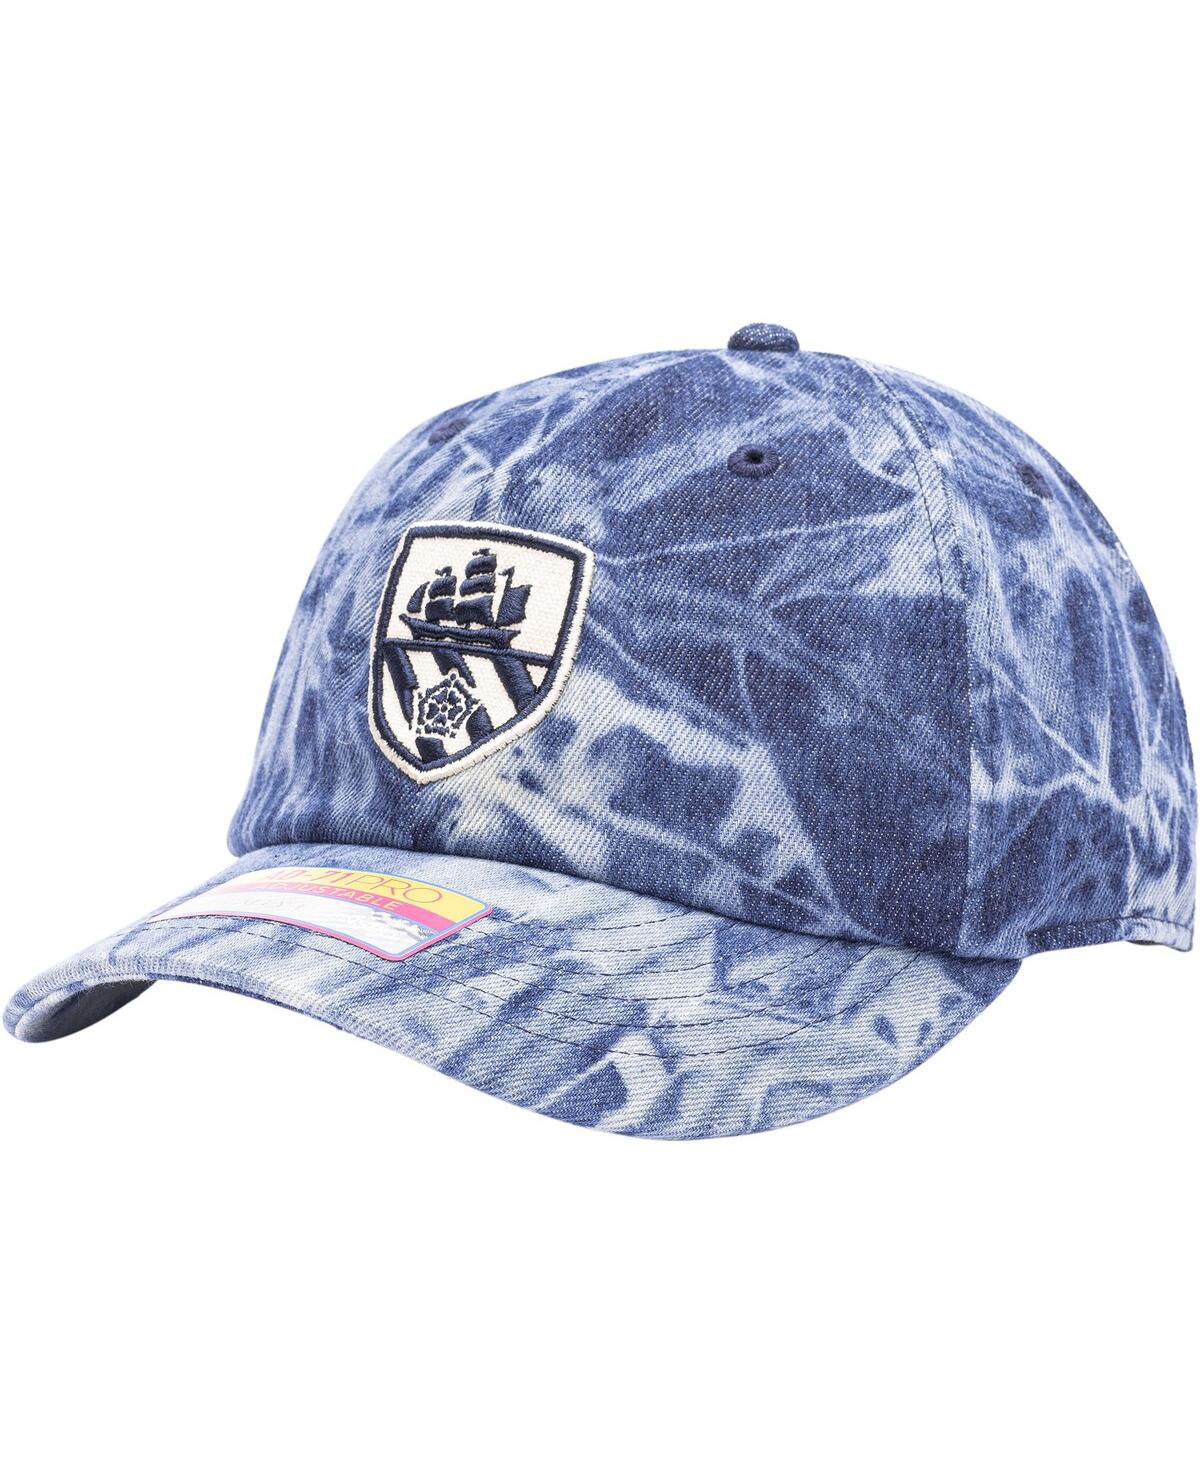 Shop Fan Ink Men's Navy Manchester City Ranch Adjustable Hat